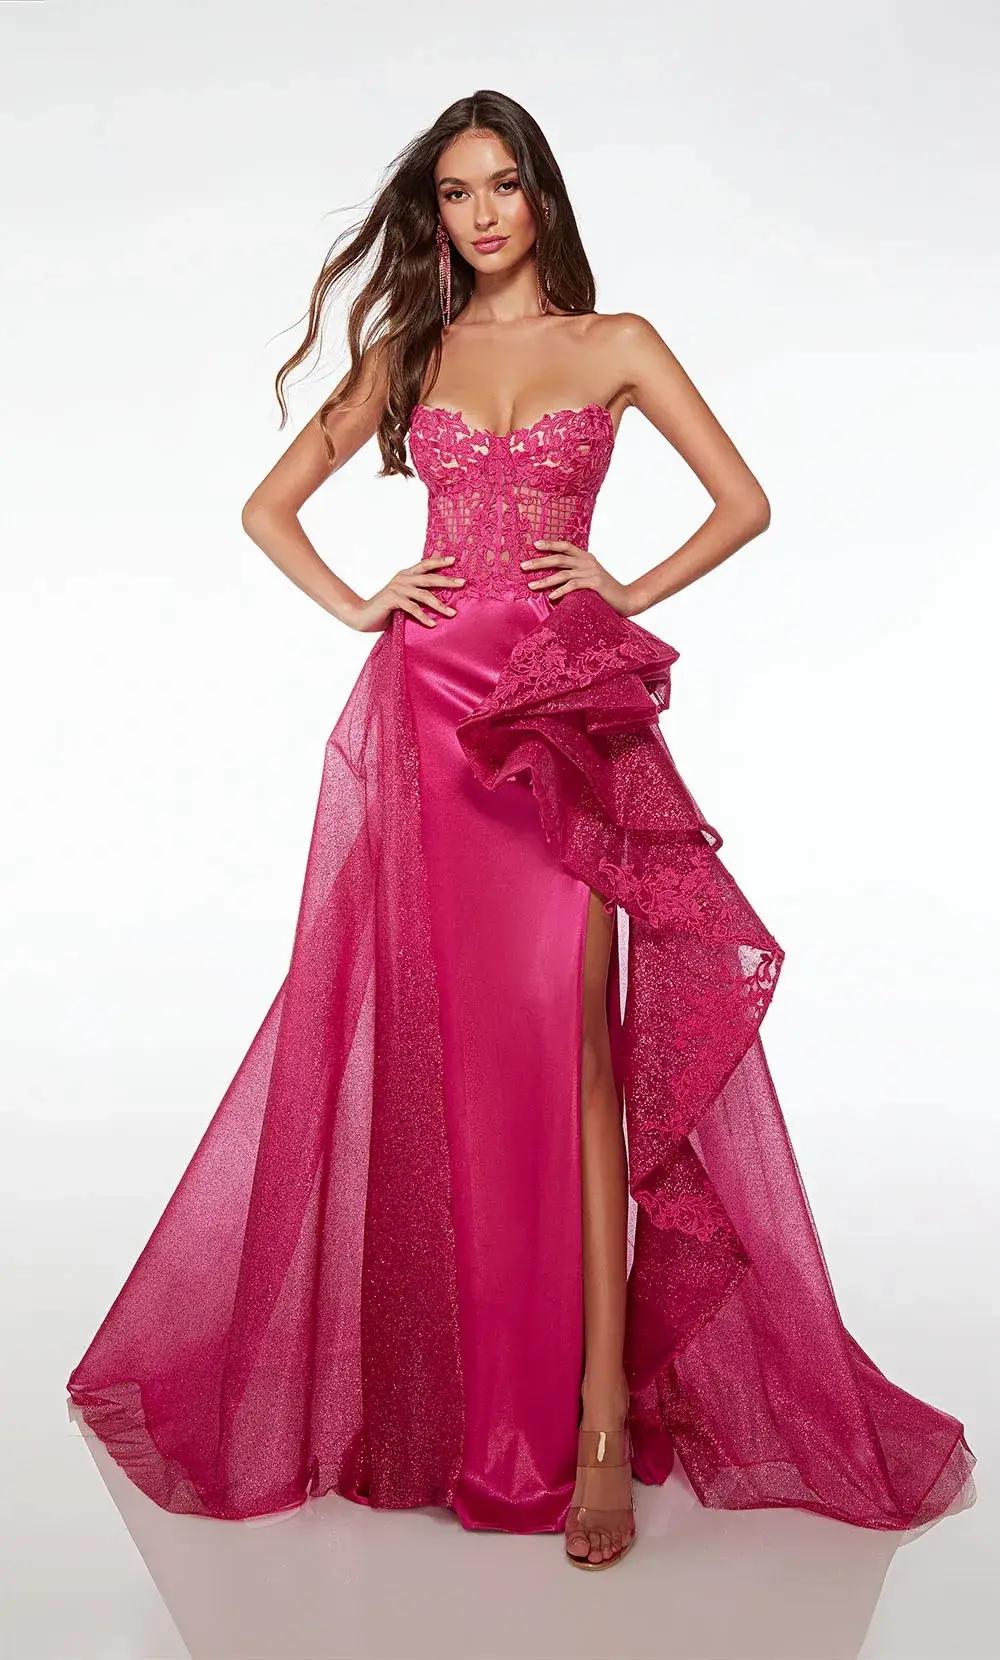 Prom Dress Inspiration: Celebrity Red Carpet Looks for Less Image